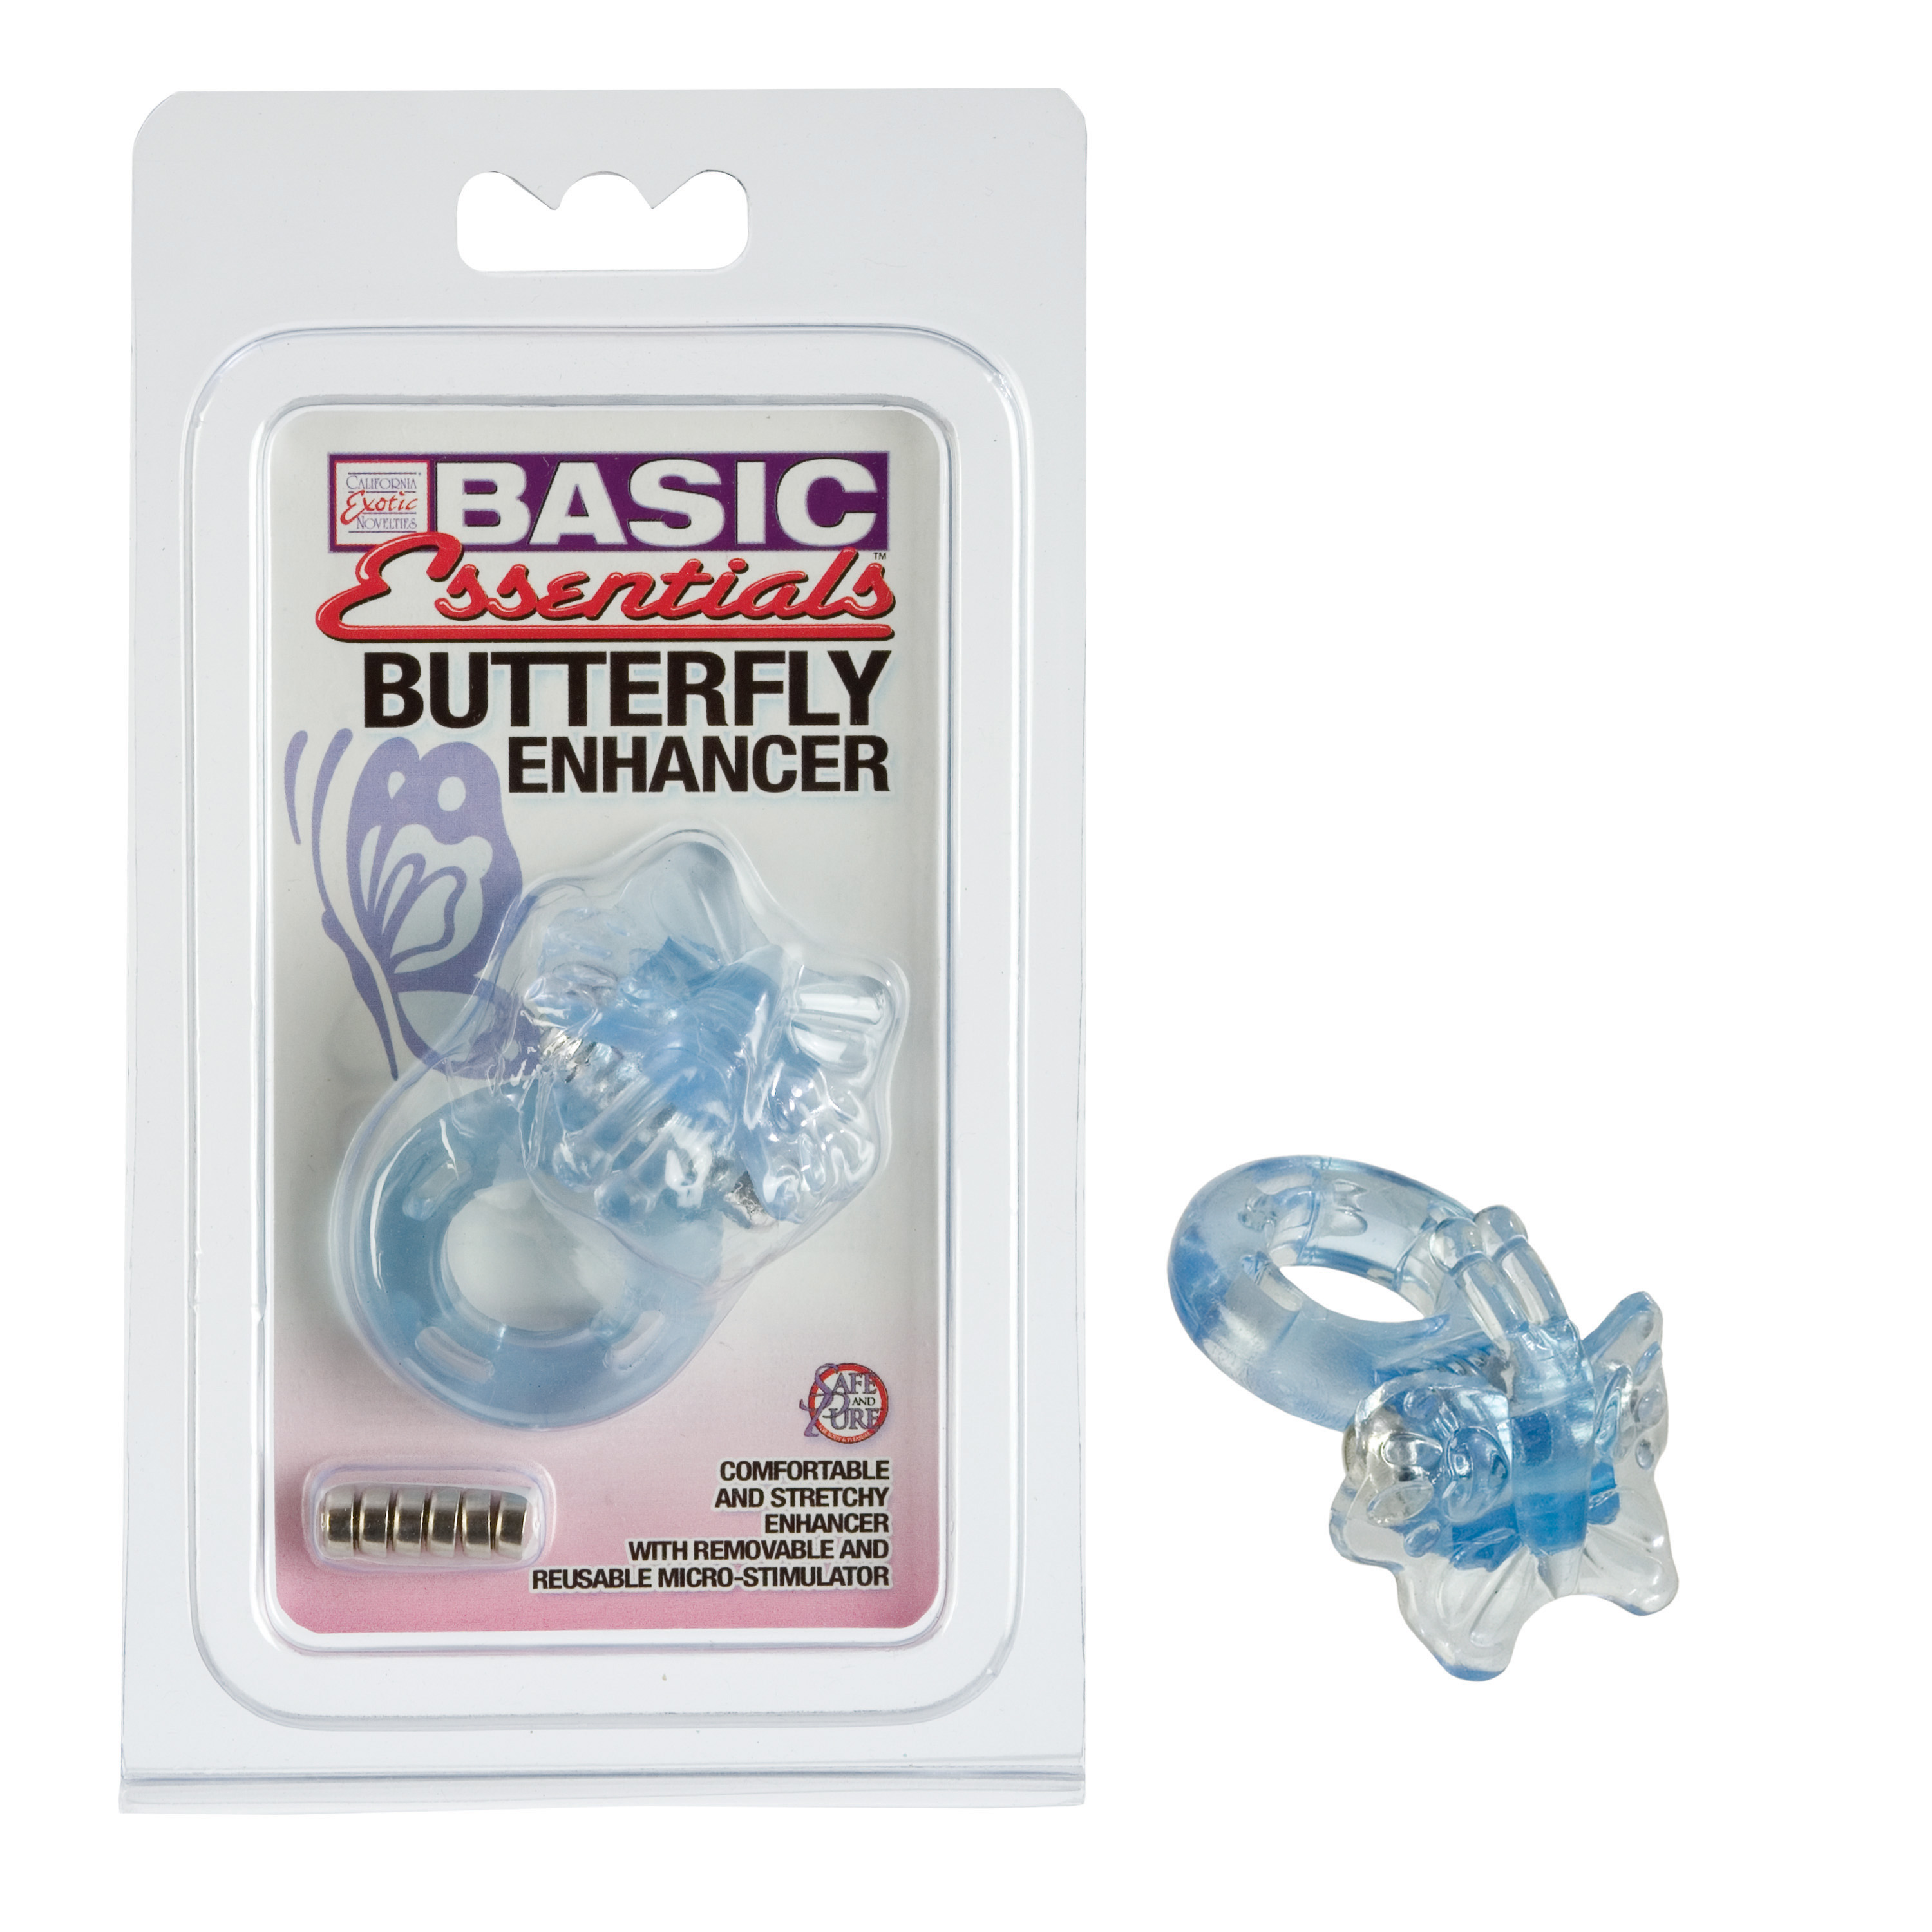 Basic Essentials Butterfly Enhancer 